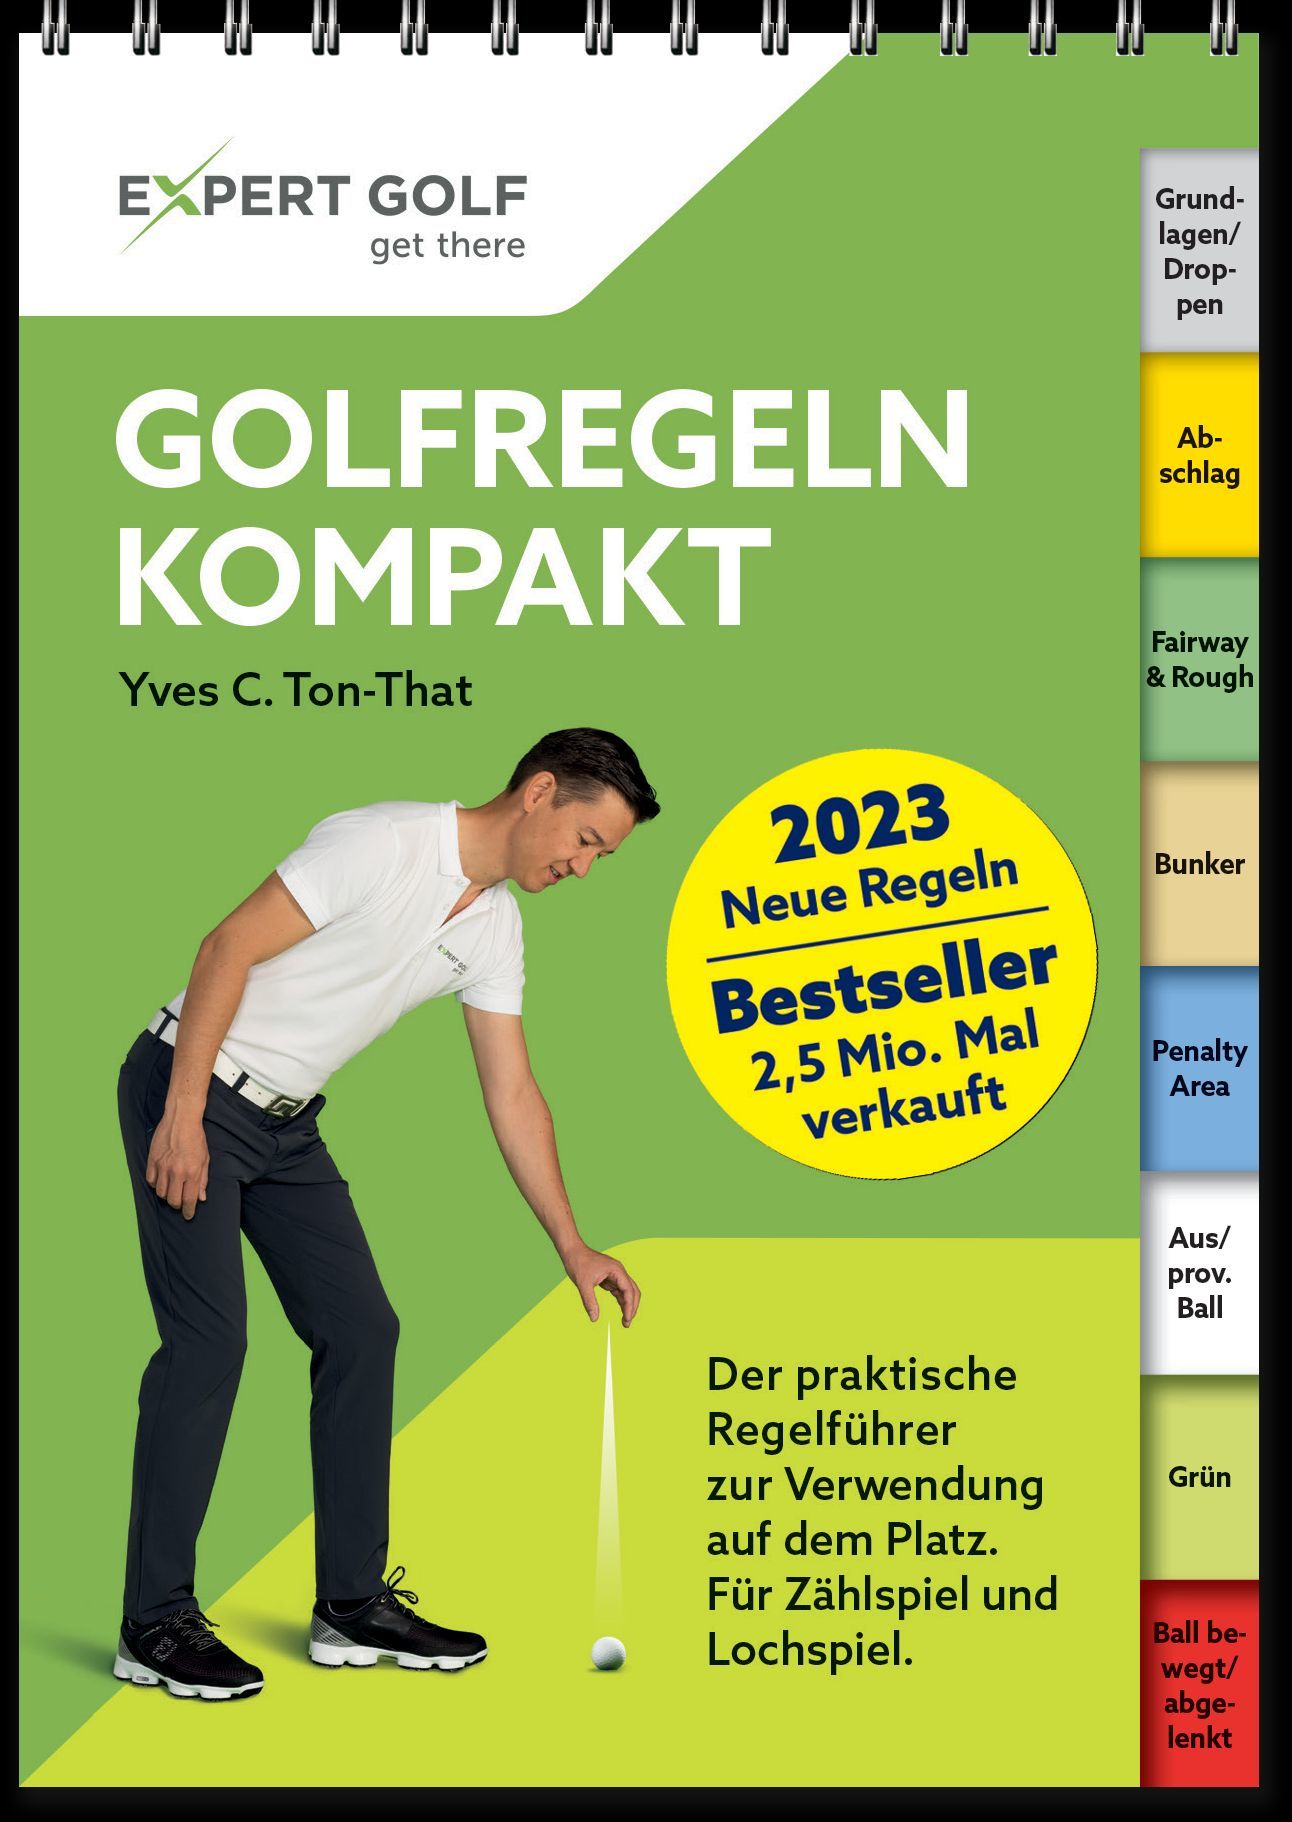 Golfregeln kompakt ton That 2023